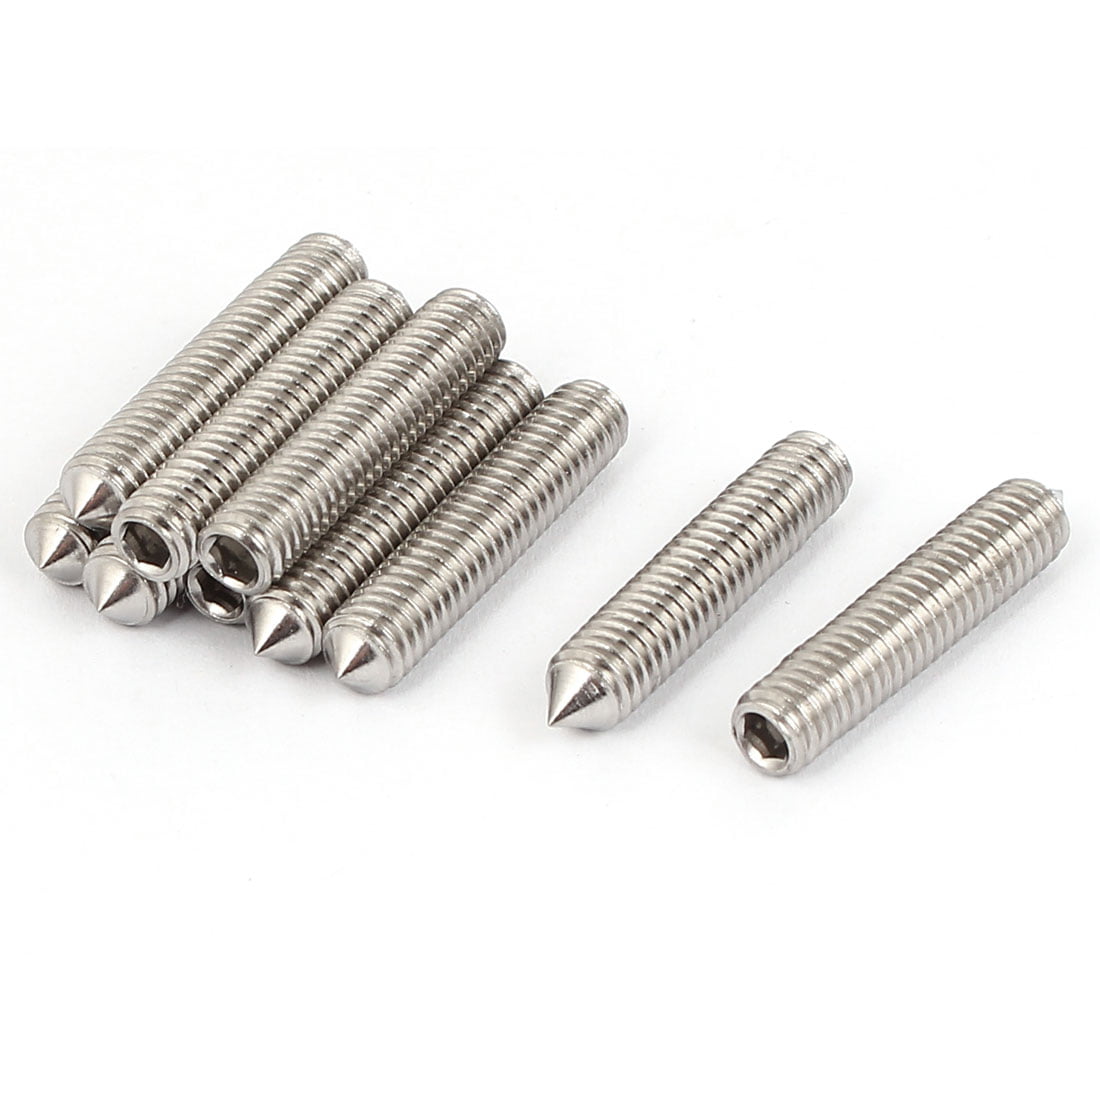 M6x20mm 1mm Pitch 12.9 Alloy Steel Hex Socket Set Cone Point Grub Screws 10pcs 